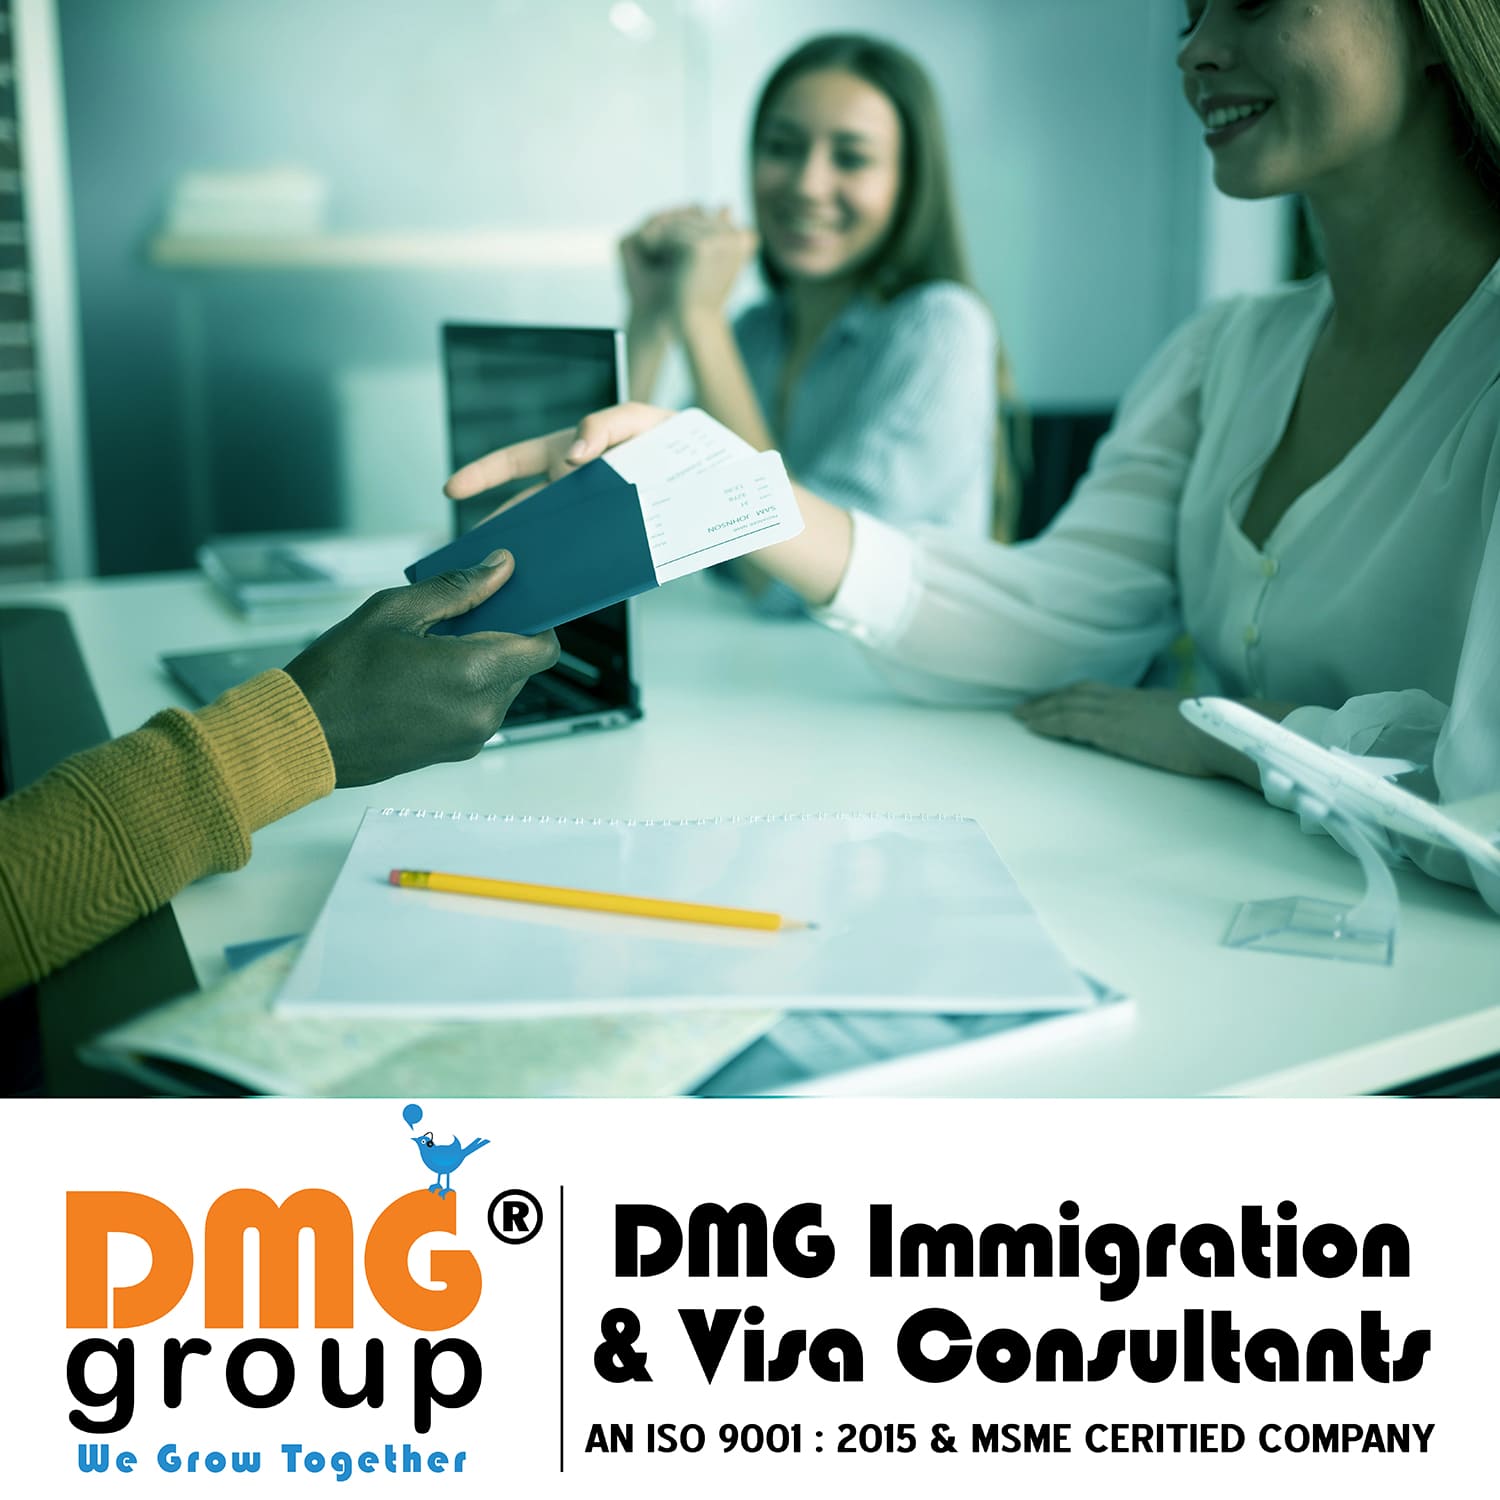 DMG Immigartion & Visa Consultants